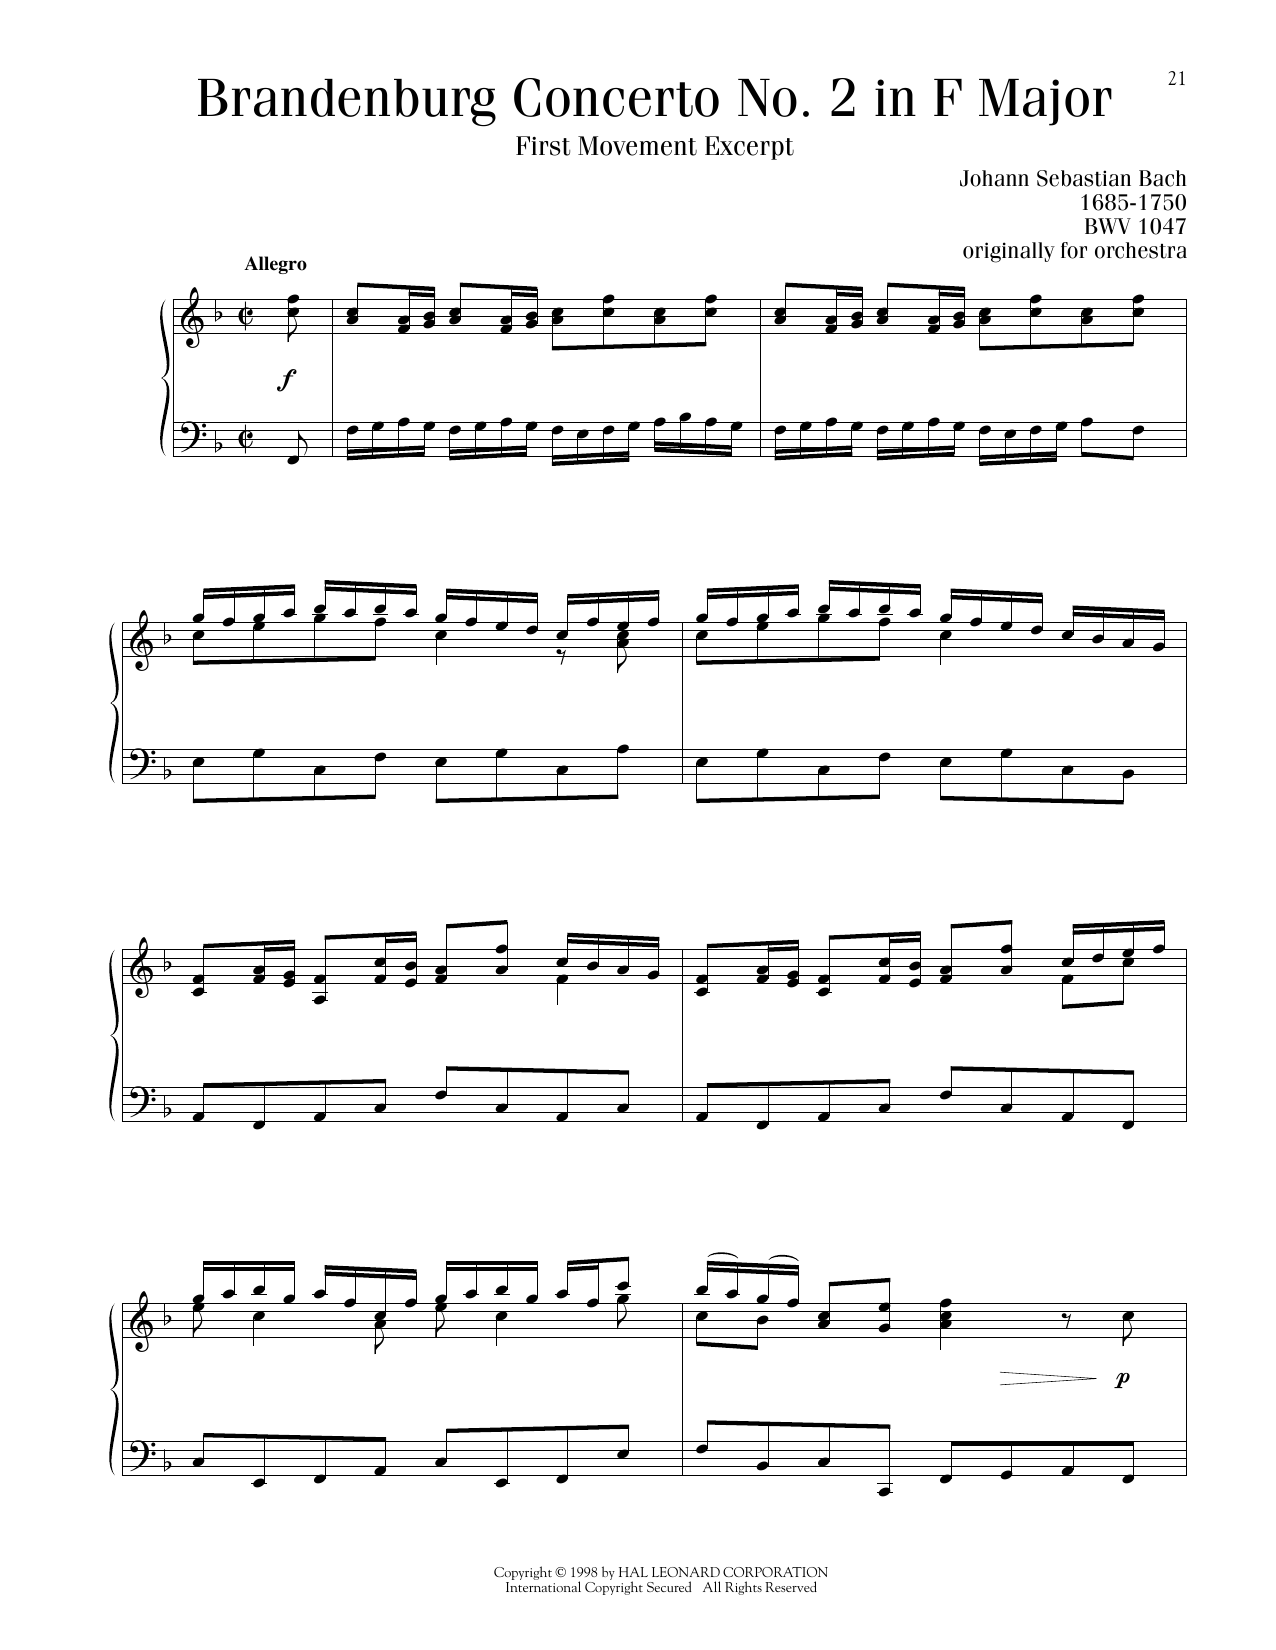 Johann Sebastian Bach Brandenburg Concerto No. 2 in F Major, First Movement Excerpt sheet music notes printable PDF score